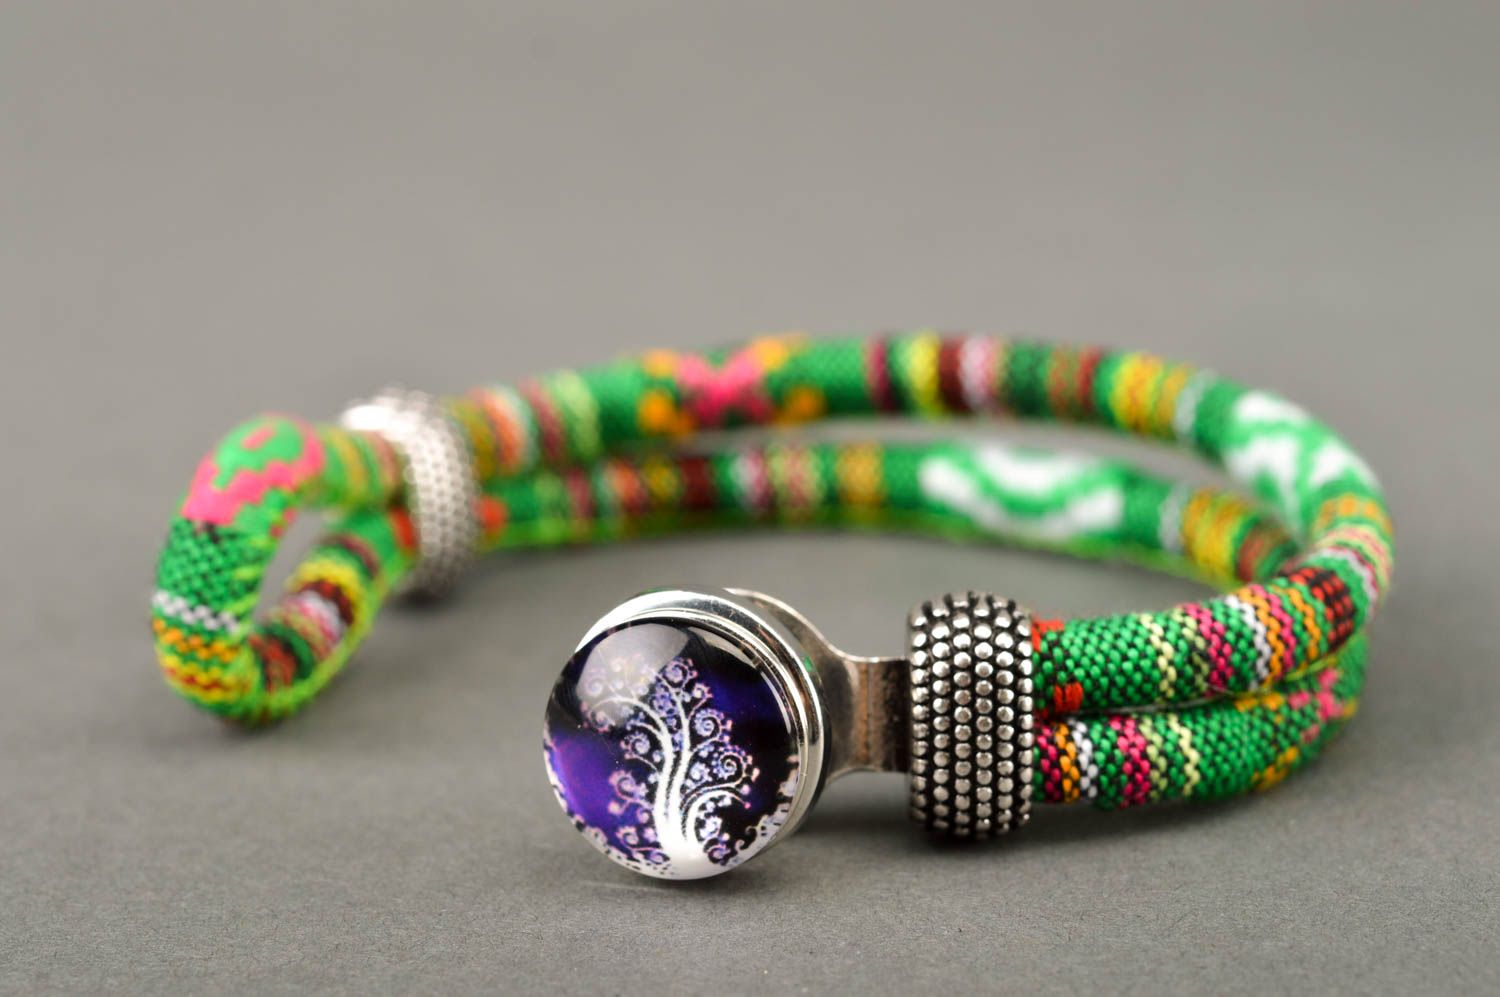 Handcrafted jewelry fashion bracelet wrist bracelet designer accessories for her photo 3